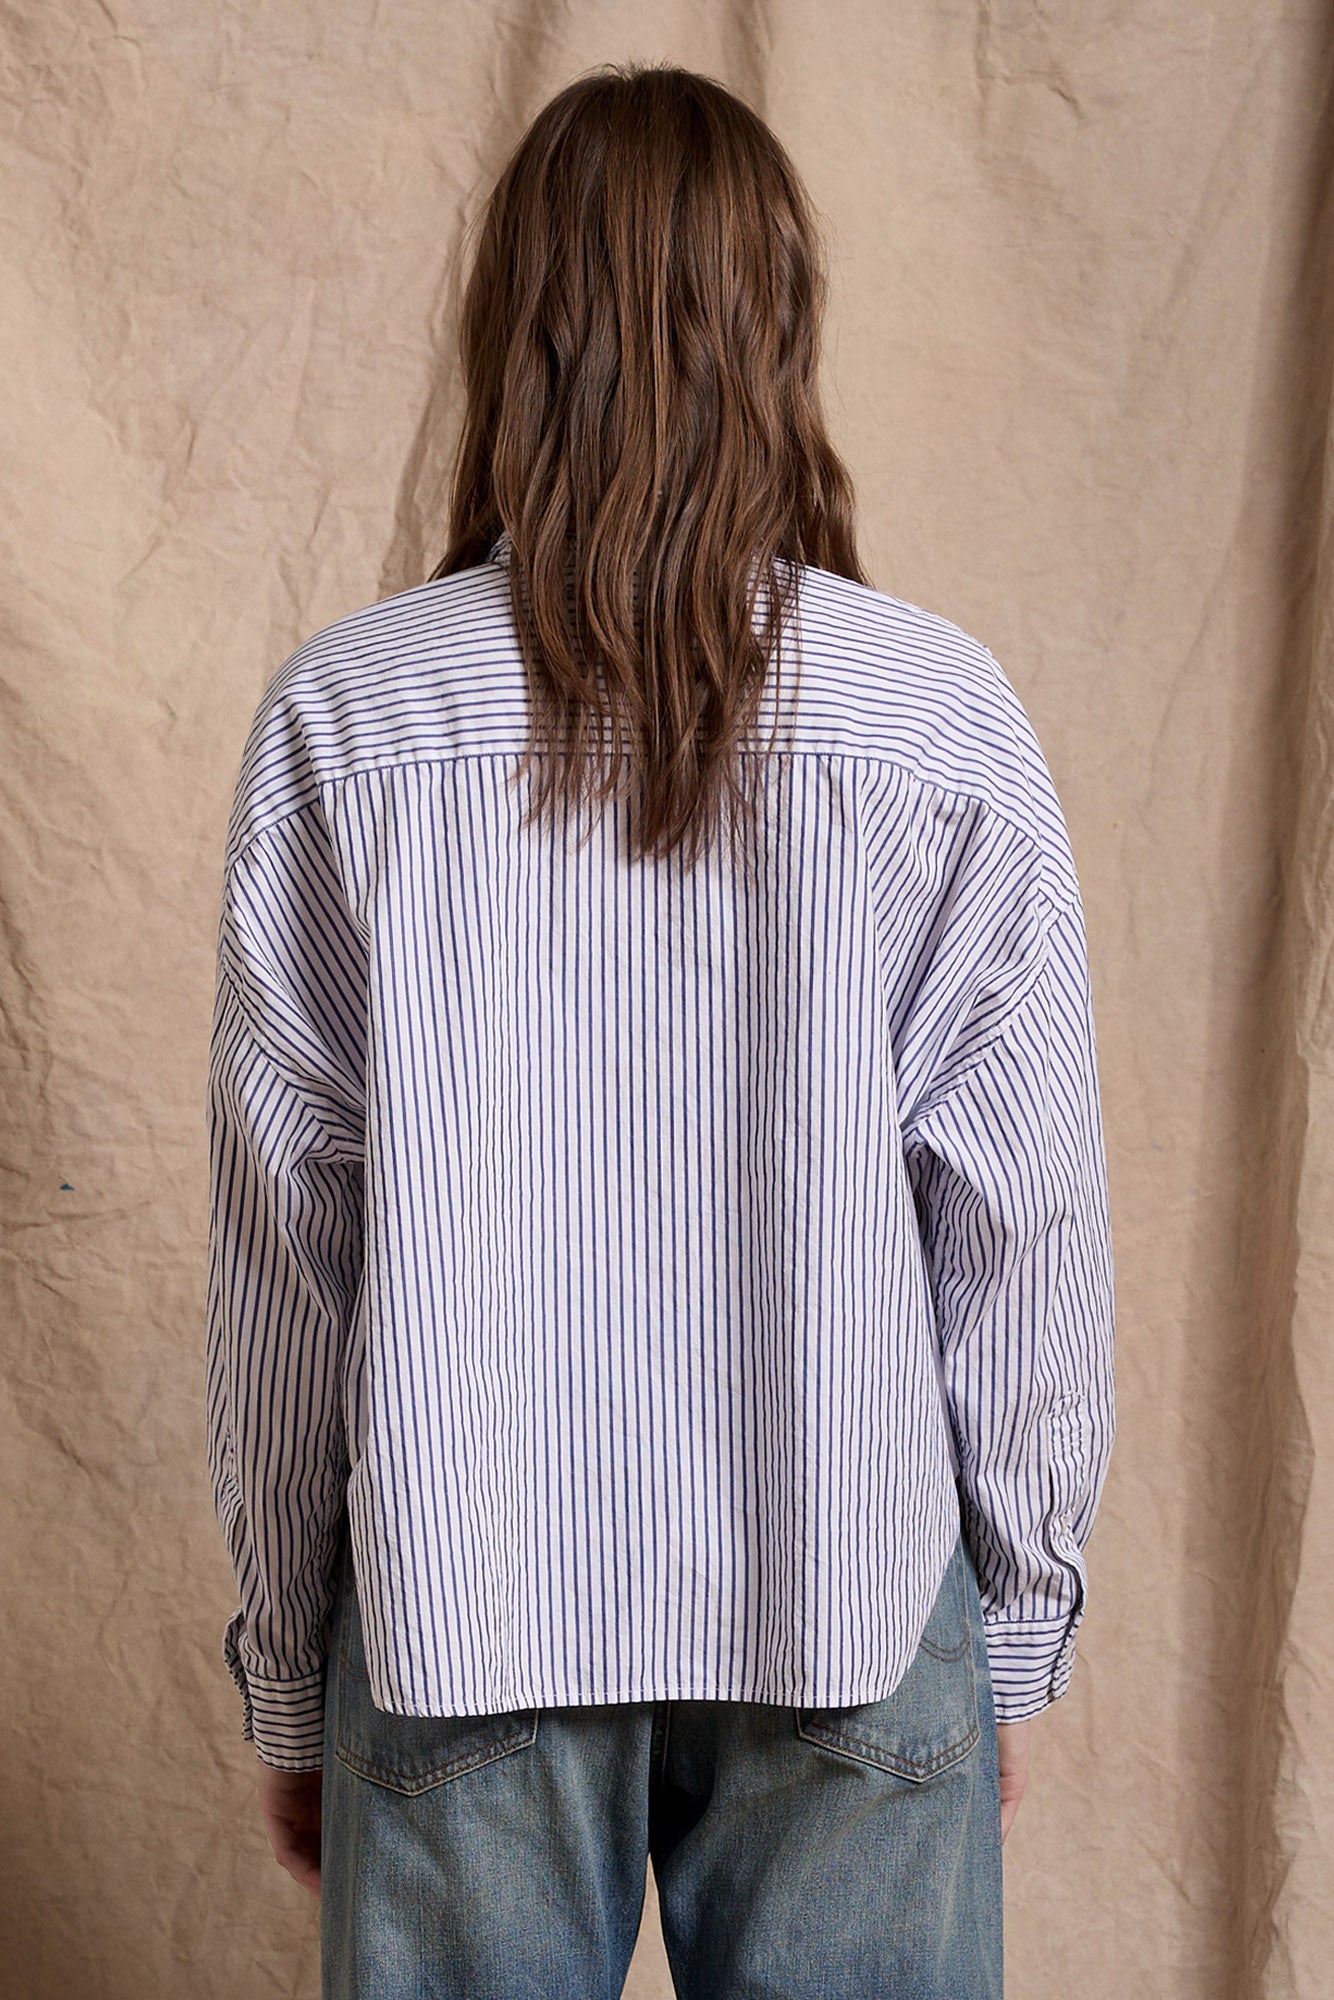 Cropped Button Front Shirt - Medium Blue Stripe